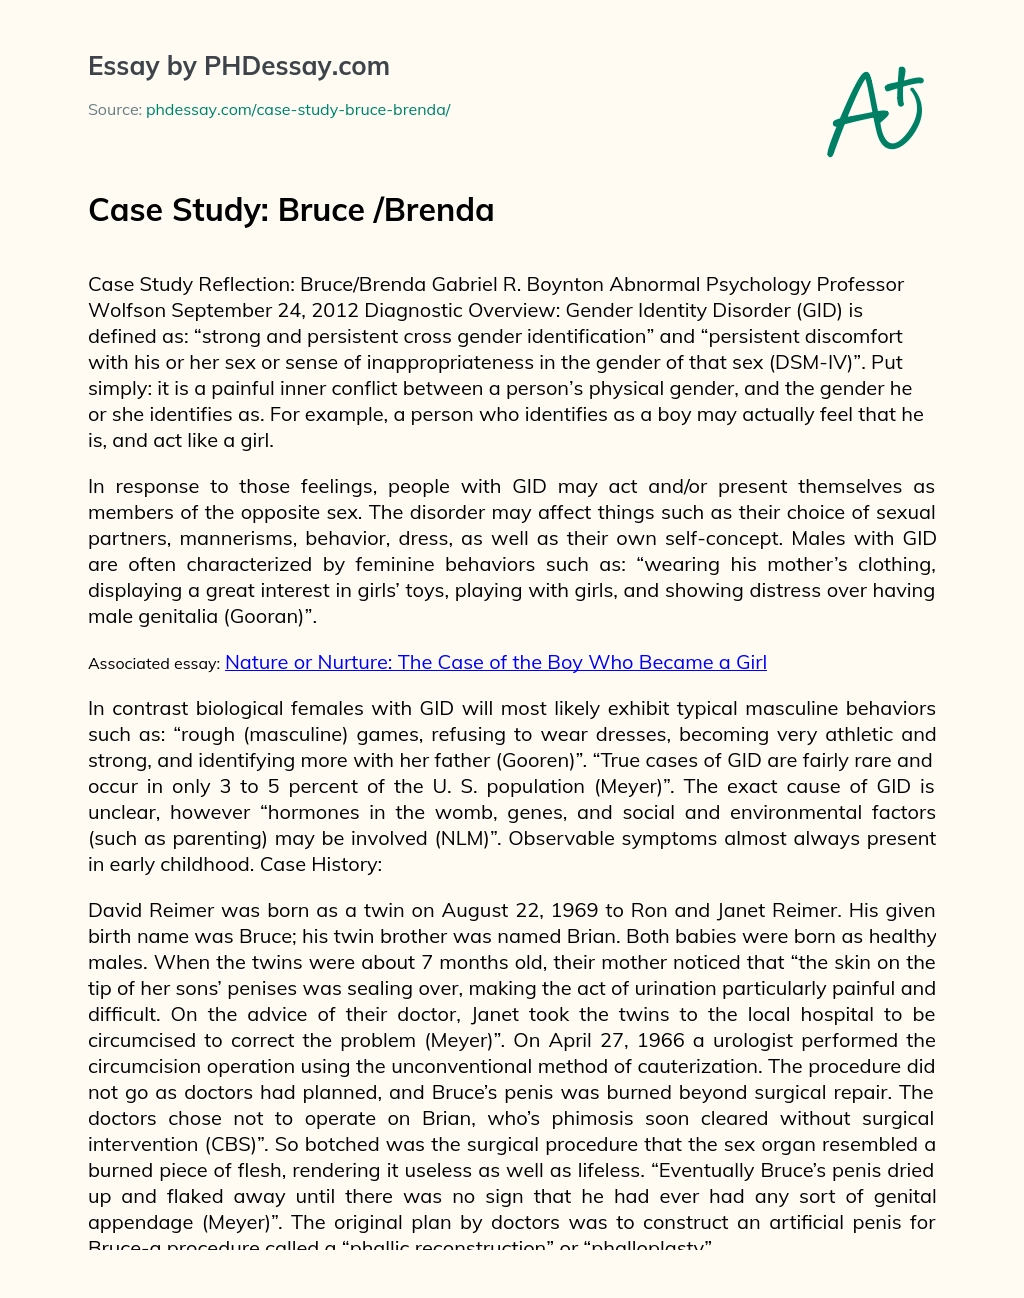 Case Study: Bruce /Brenda essay